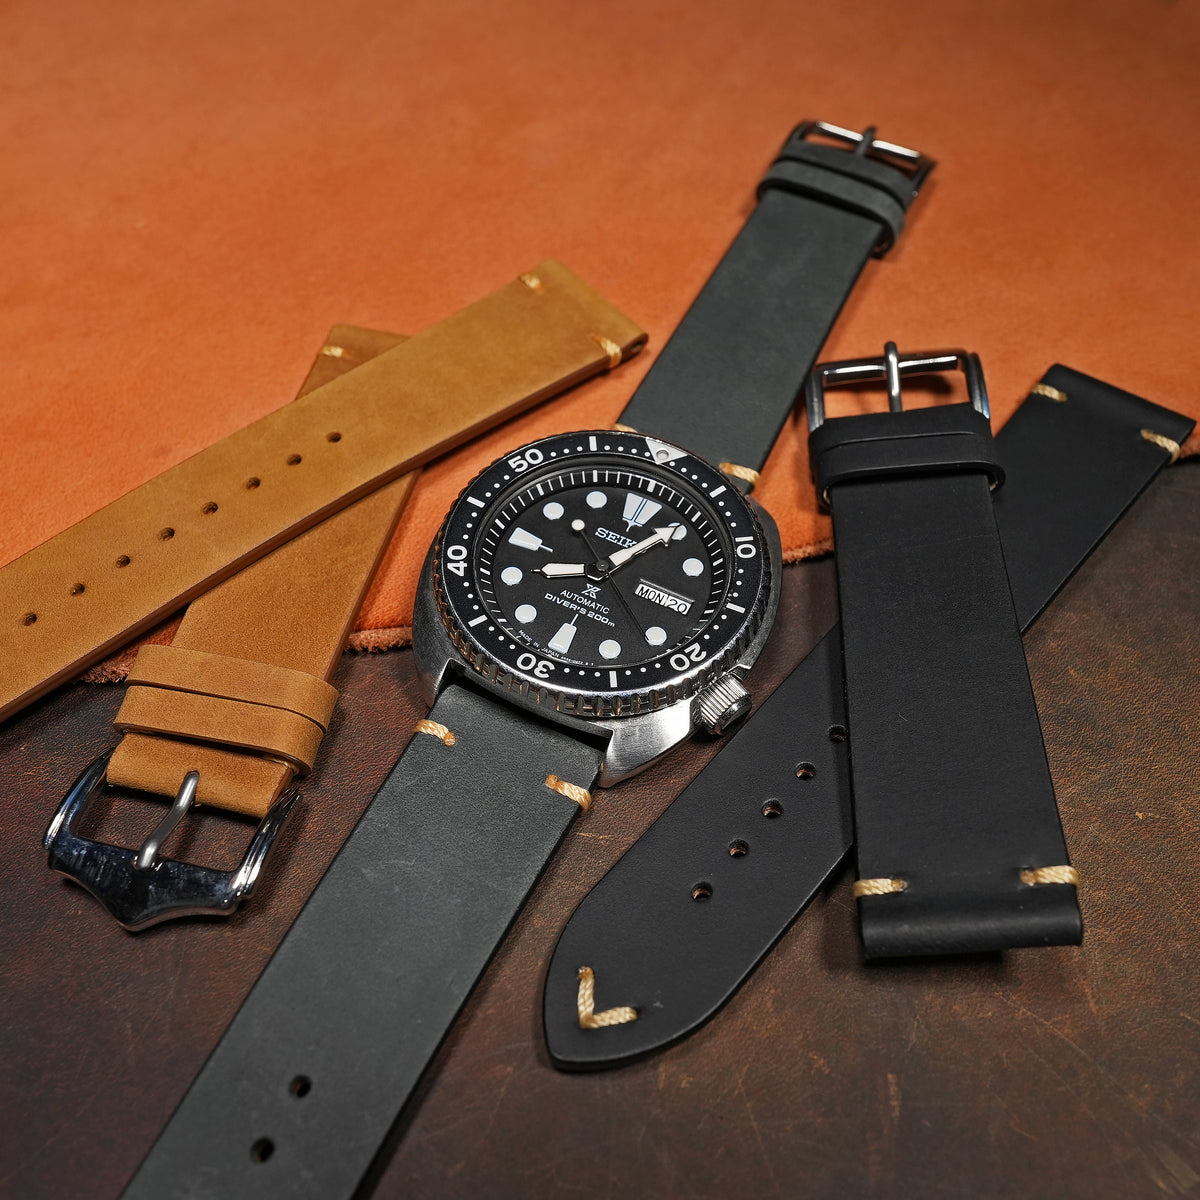 Premium Vintage Calf Leather Watch Strap in Grey - Nomad Watch Works MY